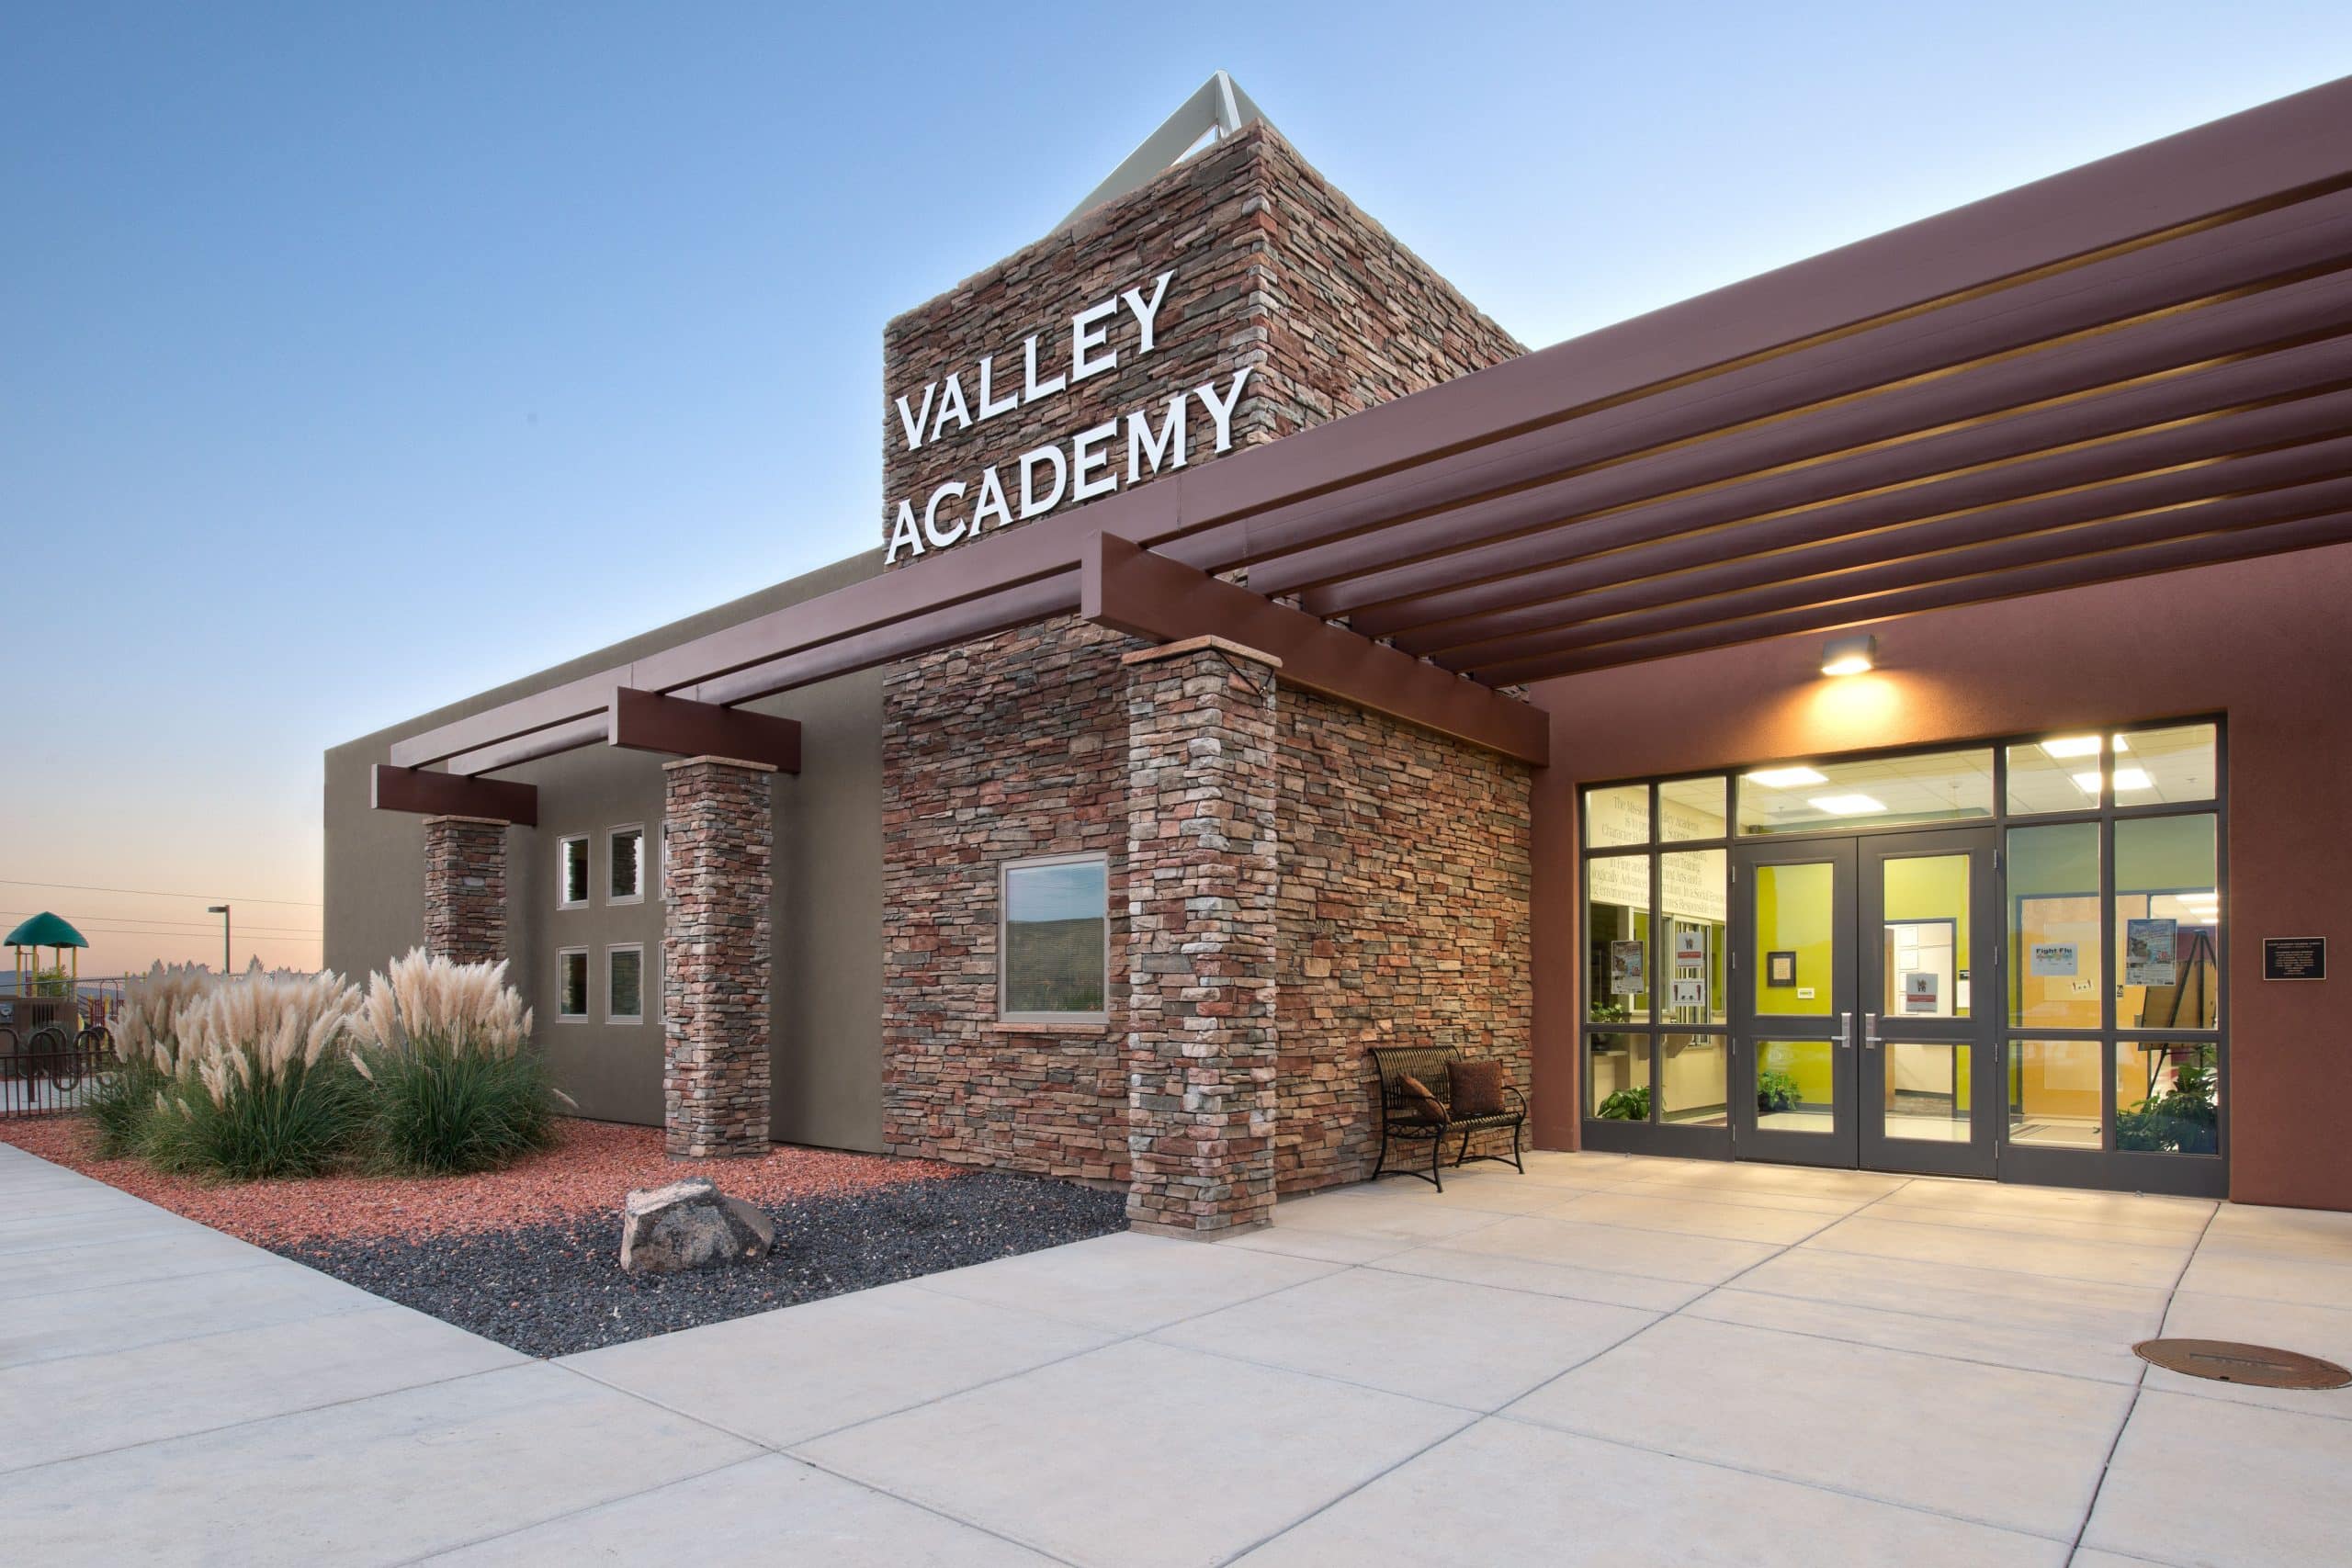 Valley Academy